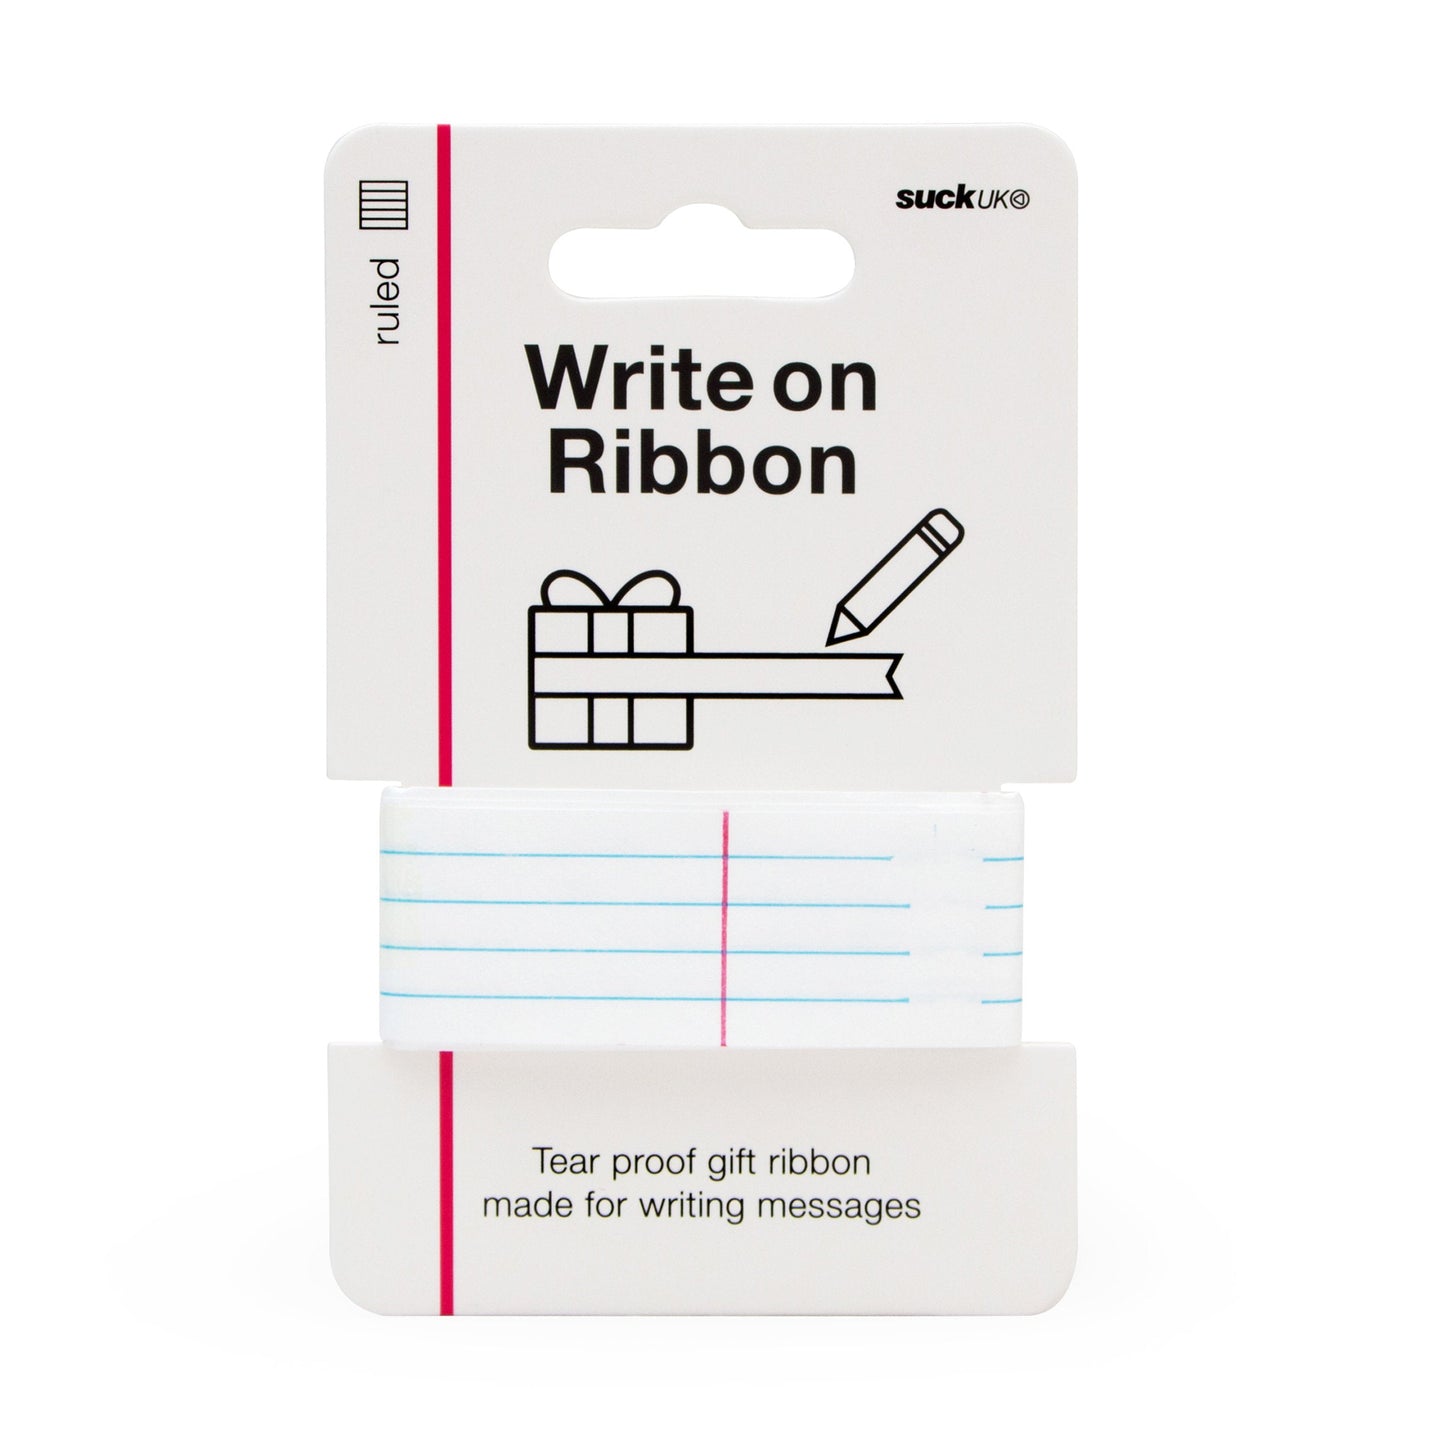 Write on Ribbon